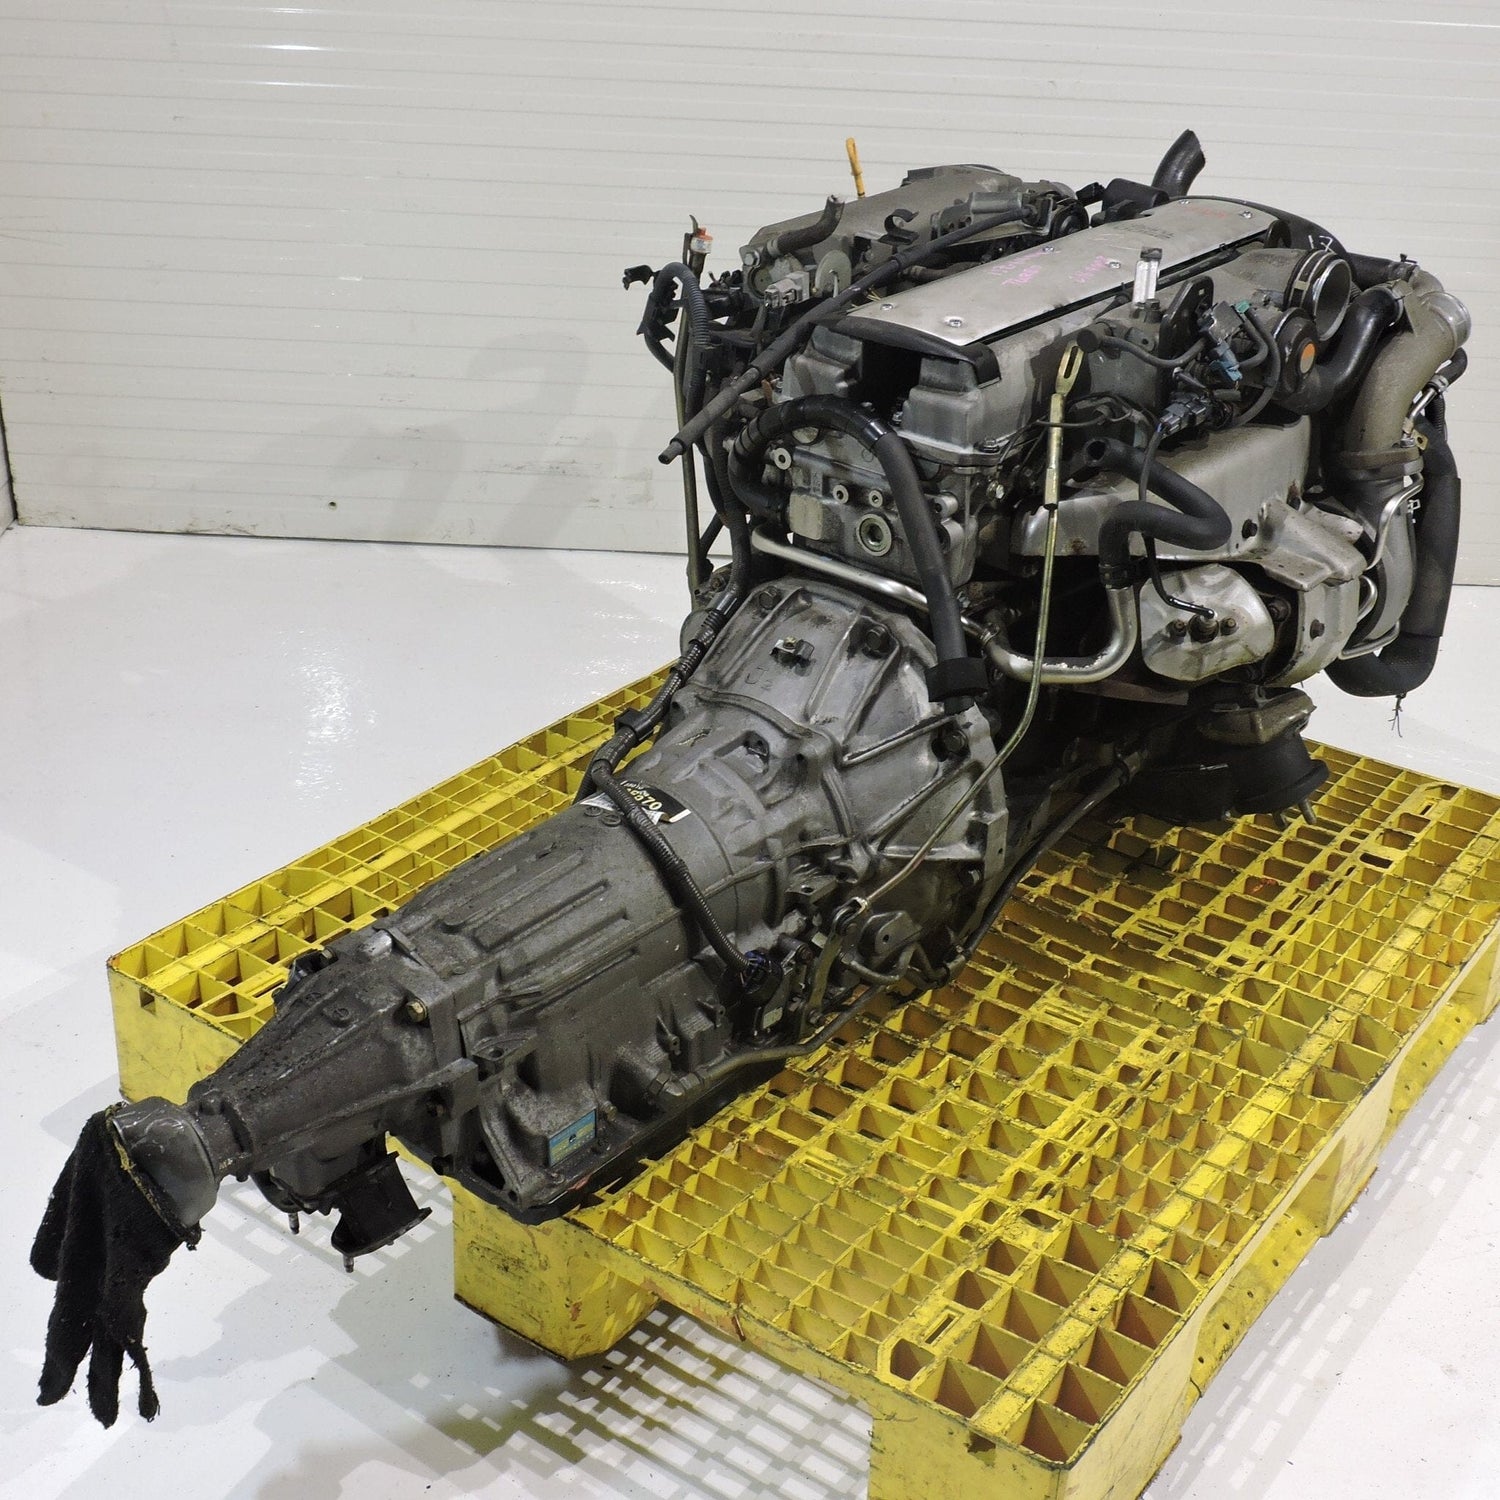 Toyota 1JZ-GTE 2.5L Vvt-I Turbo Jdm Full Engine Transmission Swap - 1JZ-GTE Vvt-I